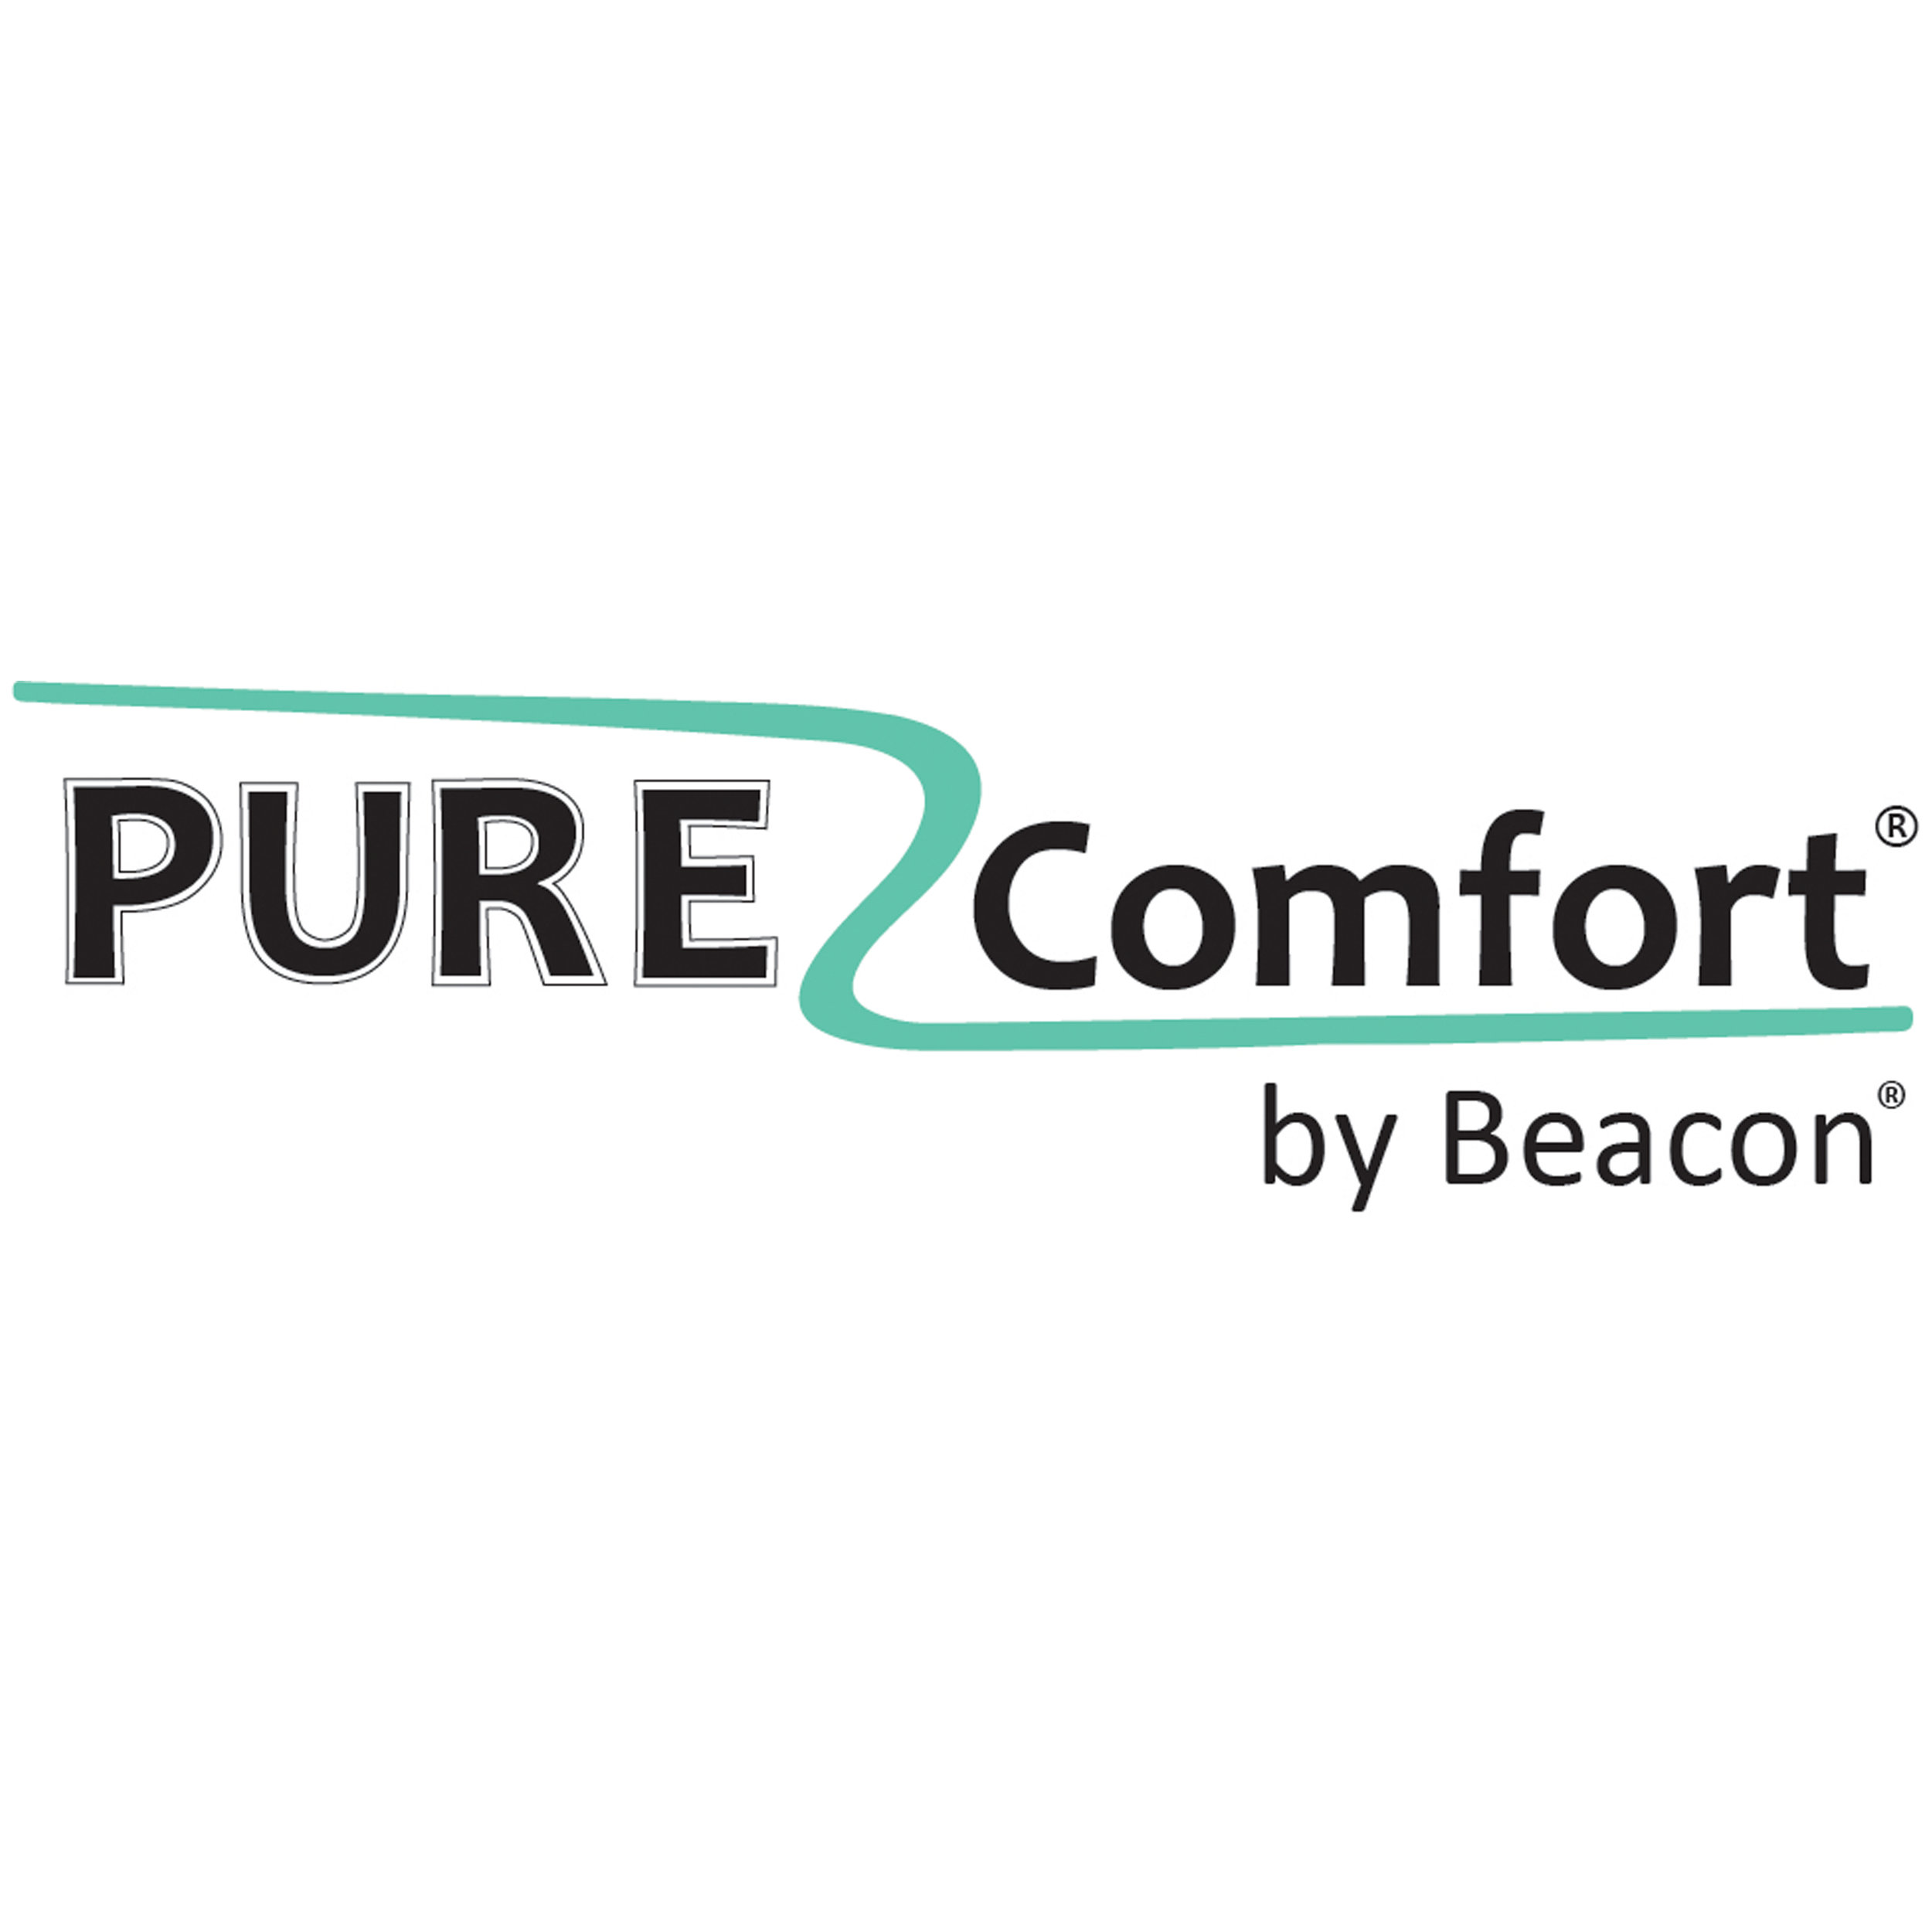 Pure Comfort Large.jpg